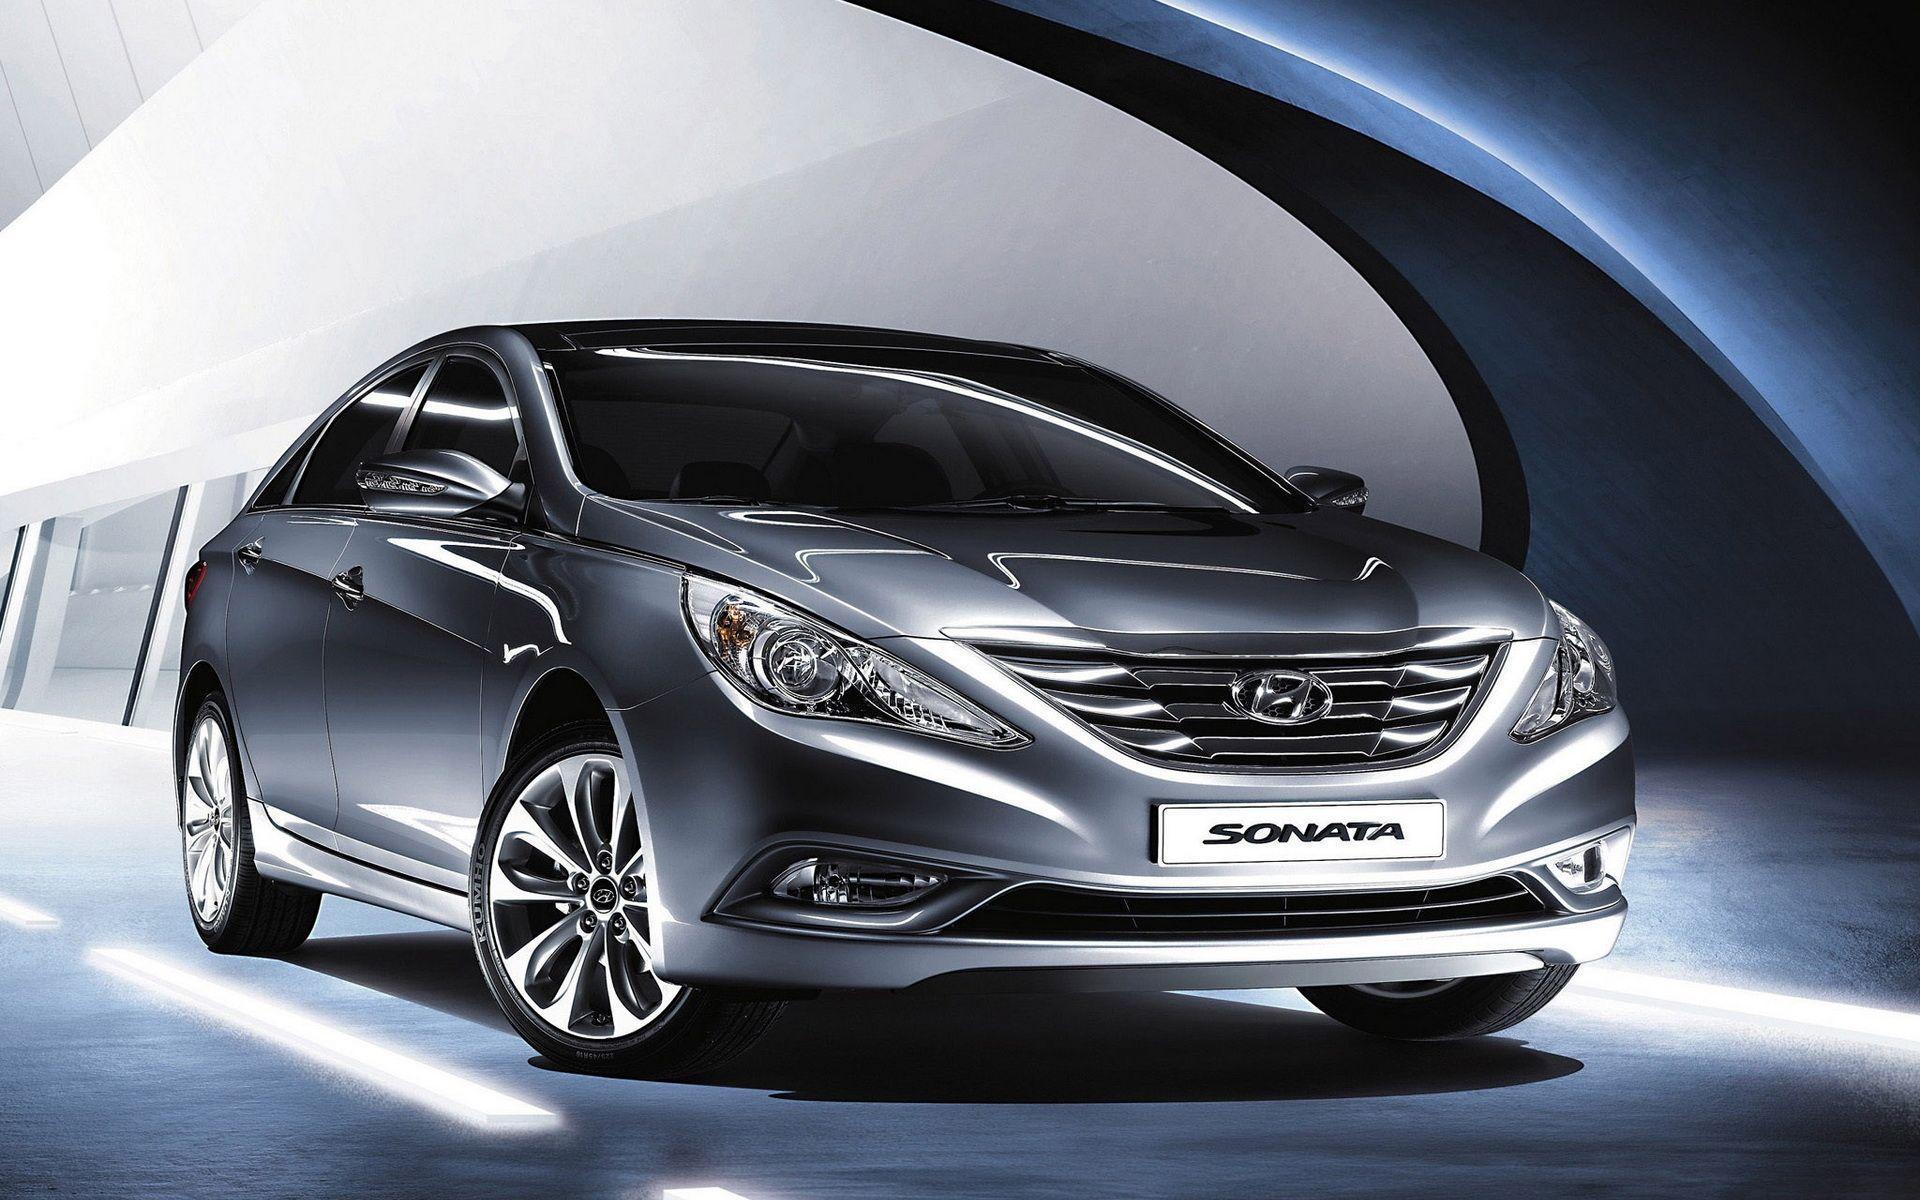 Hyundai Genesis wallpaper and image, picture, photo